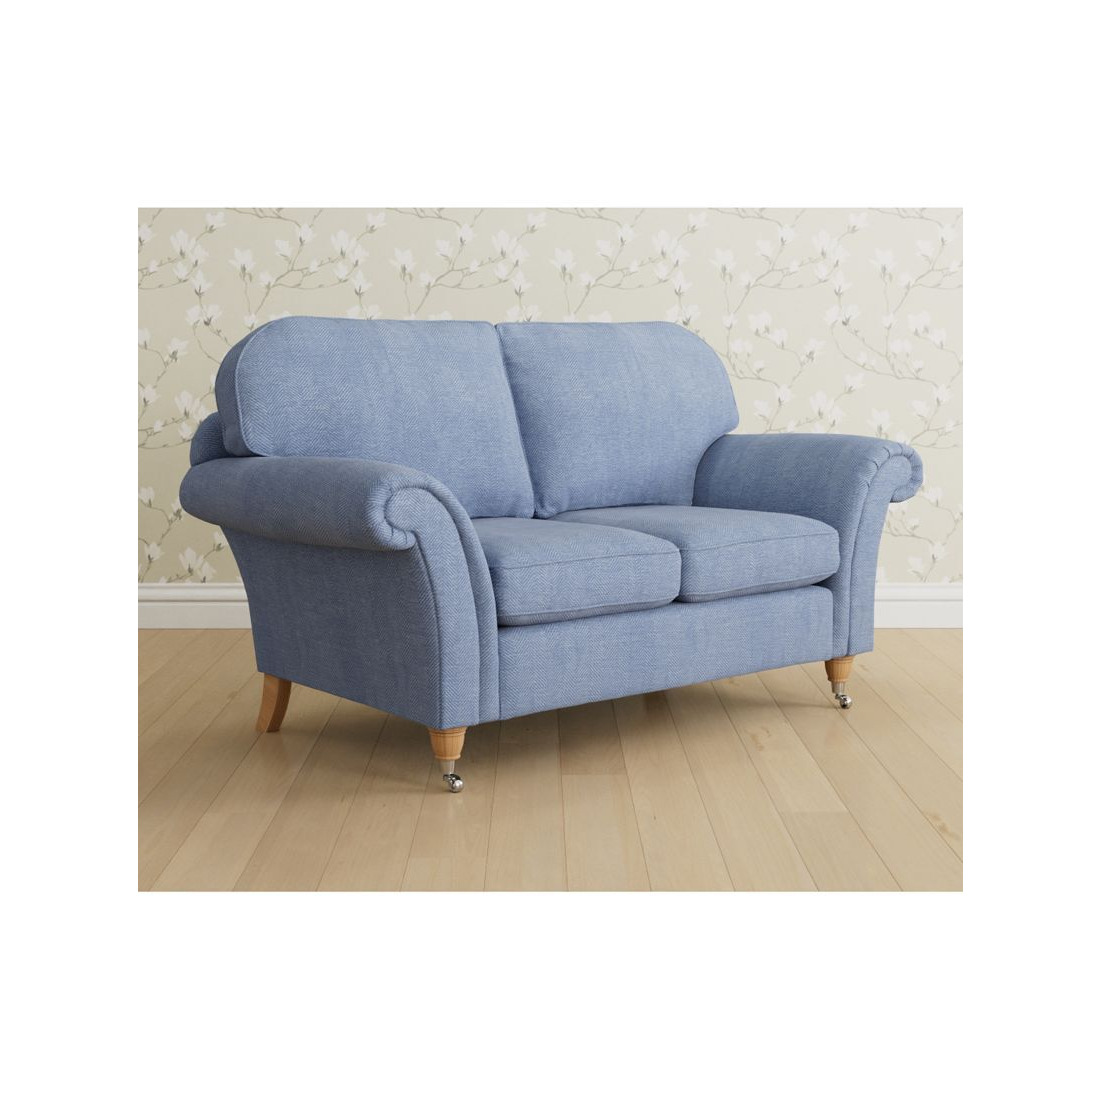 Laura Ashley Mortimer Small 2 Seater Sofa, Oak Leg - image 1